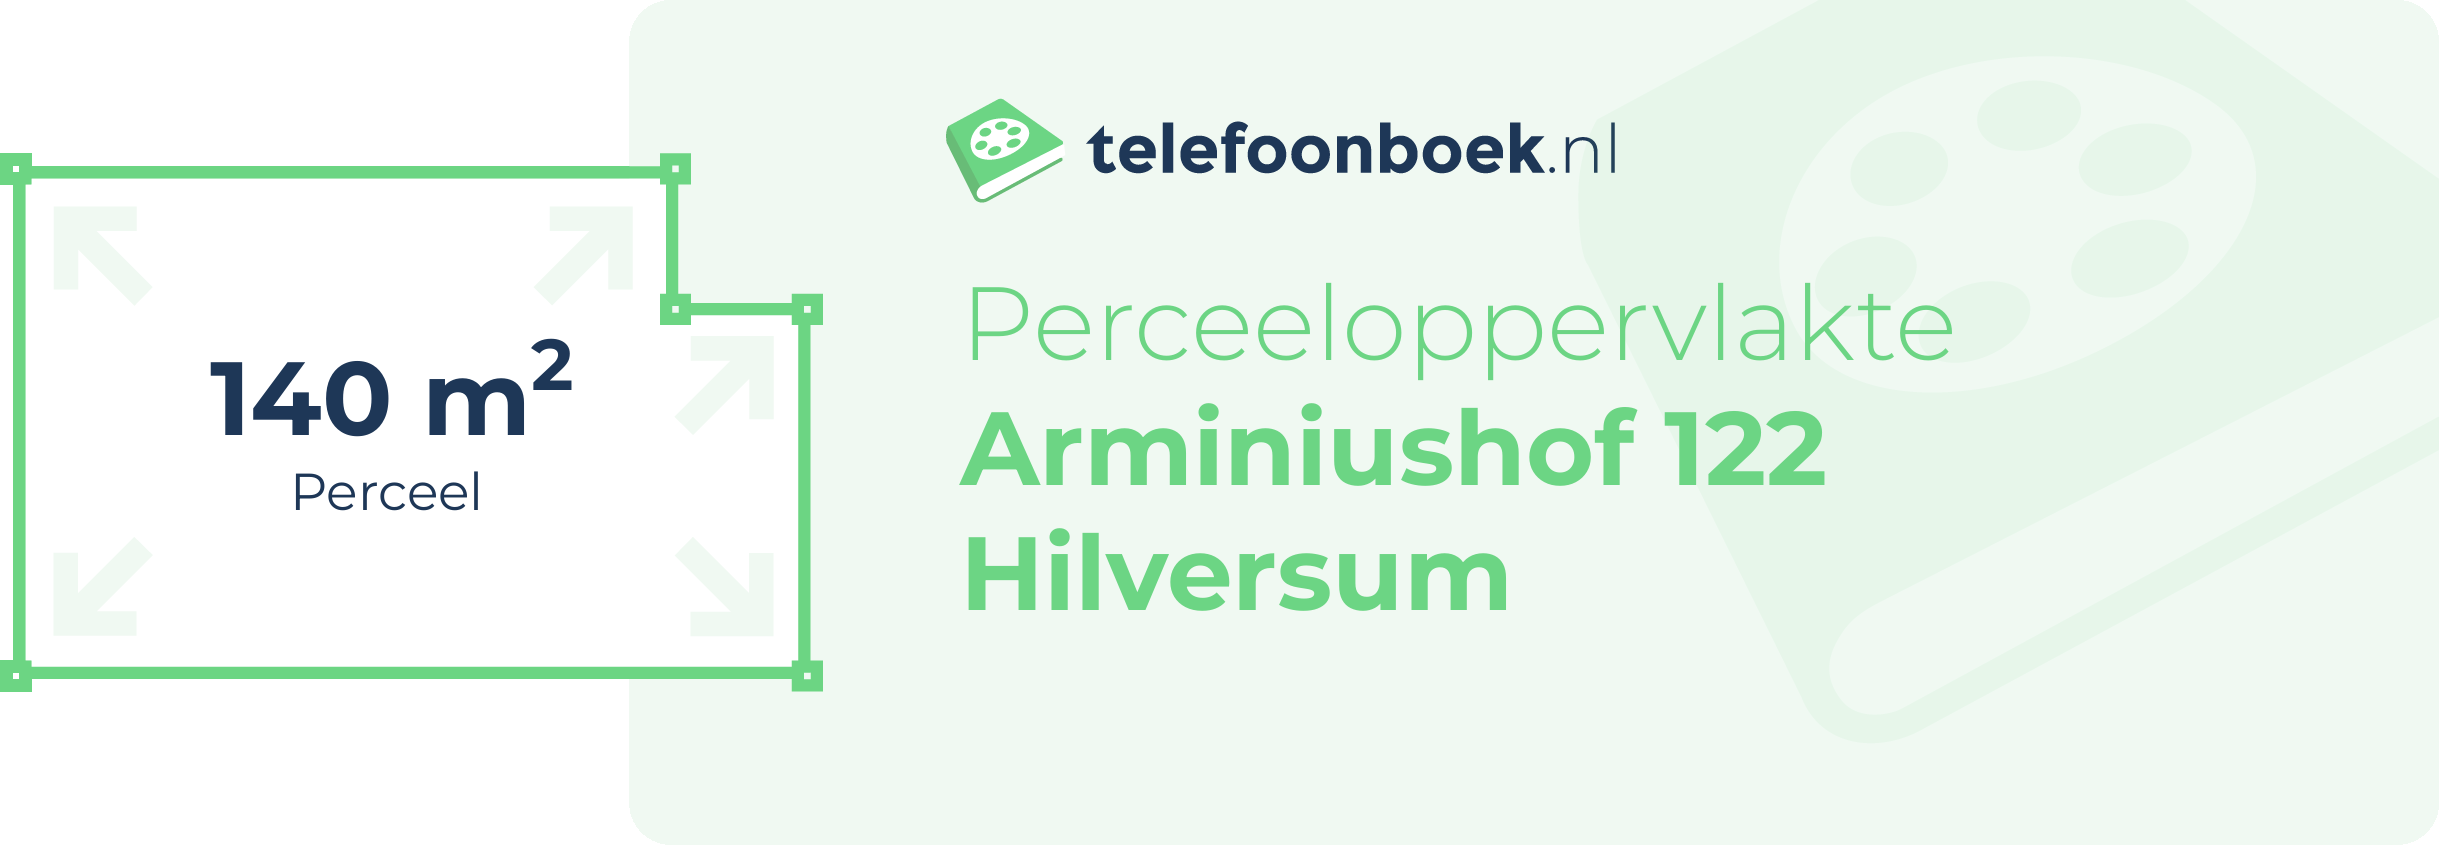 Perceeloppervlakte Arminiushof 122 Hilversum